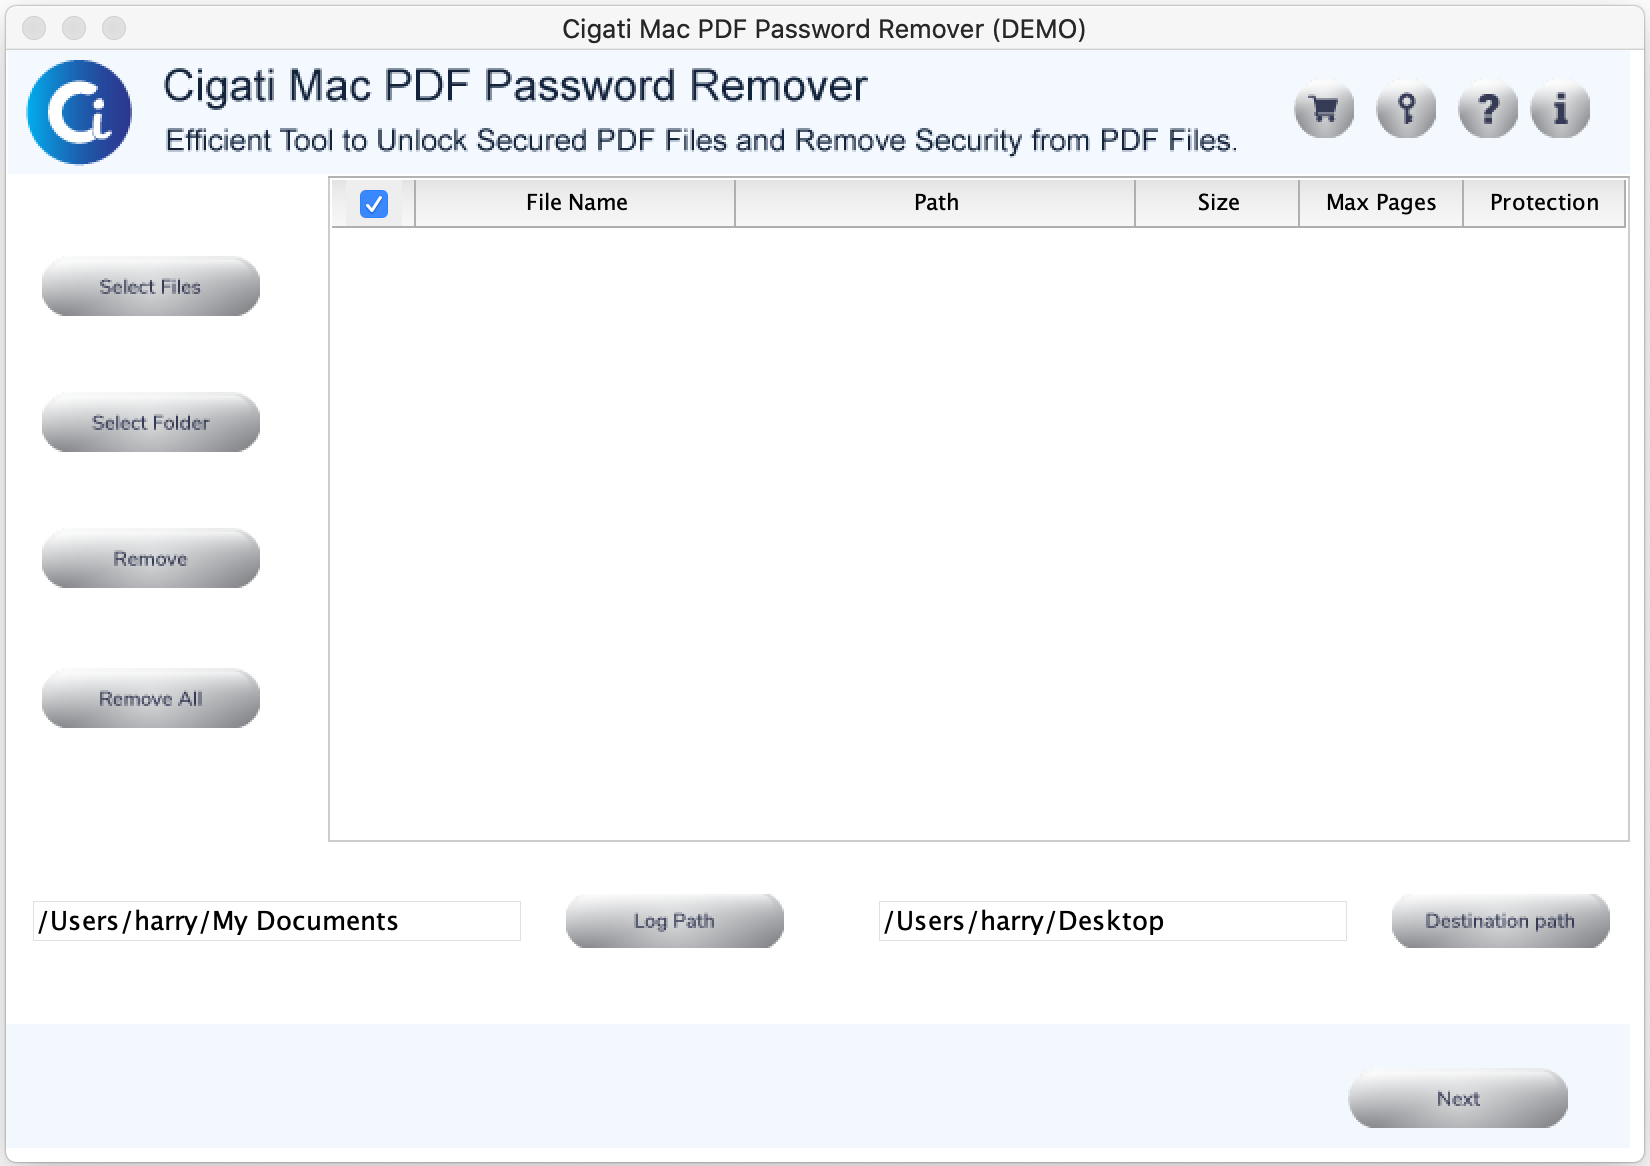 Cigati Mac PDF Password Remover 21.4 : Main Window